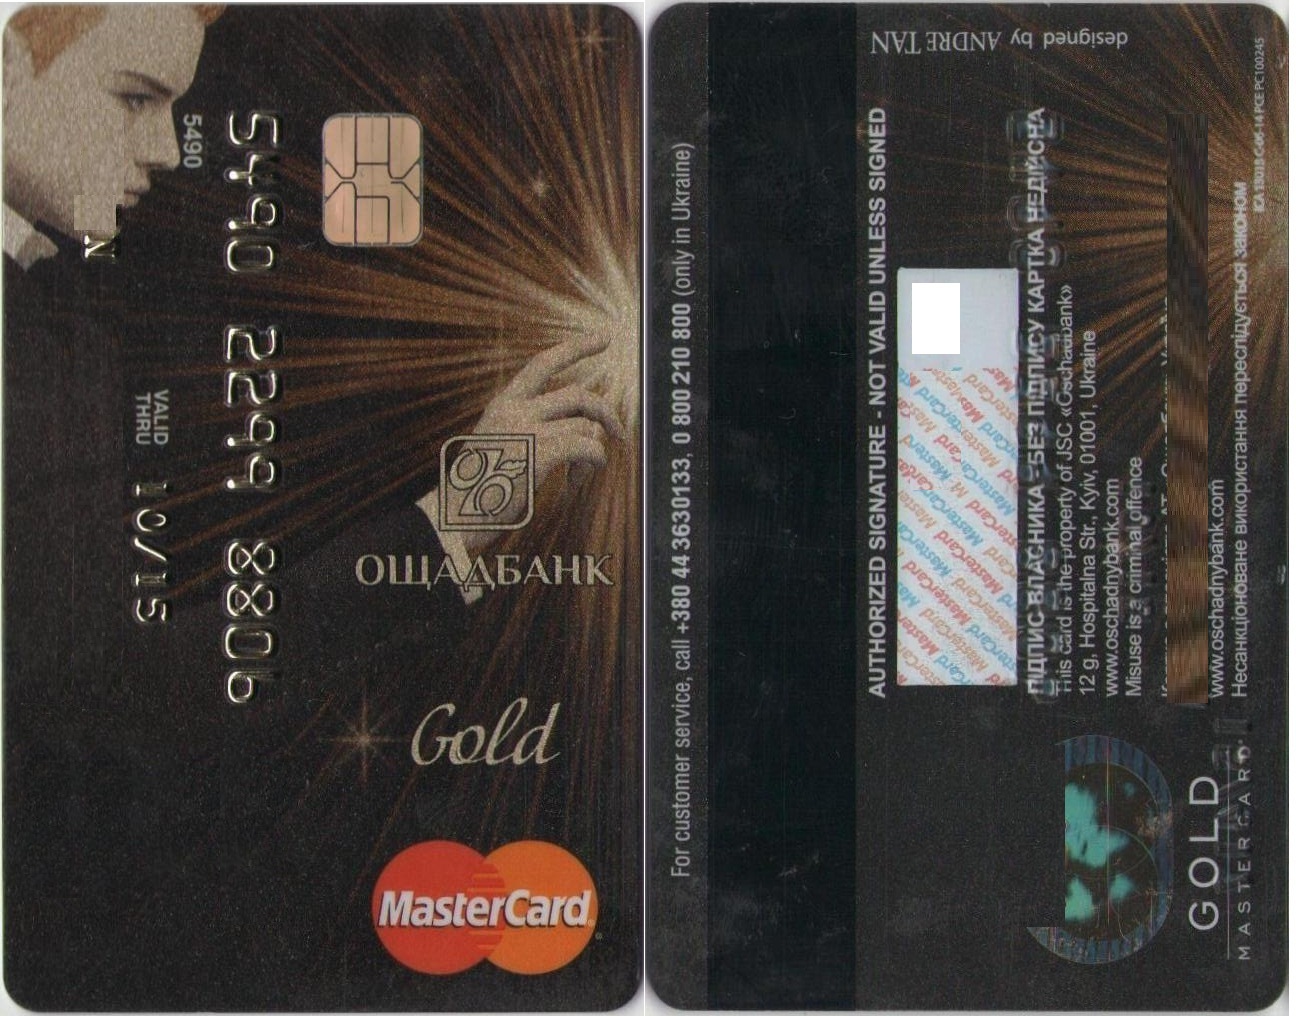 Две кредитки. Банковская карта фото с двух сторон. Банковская карточка с двух сторон. Кредитная карта с двух сторон. Банковская карта с 2 сторон.